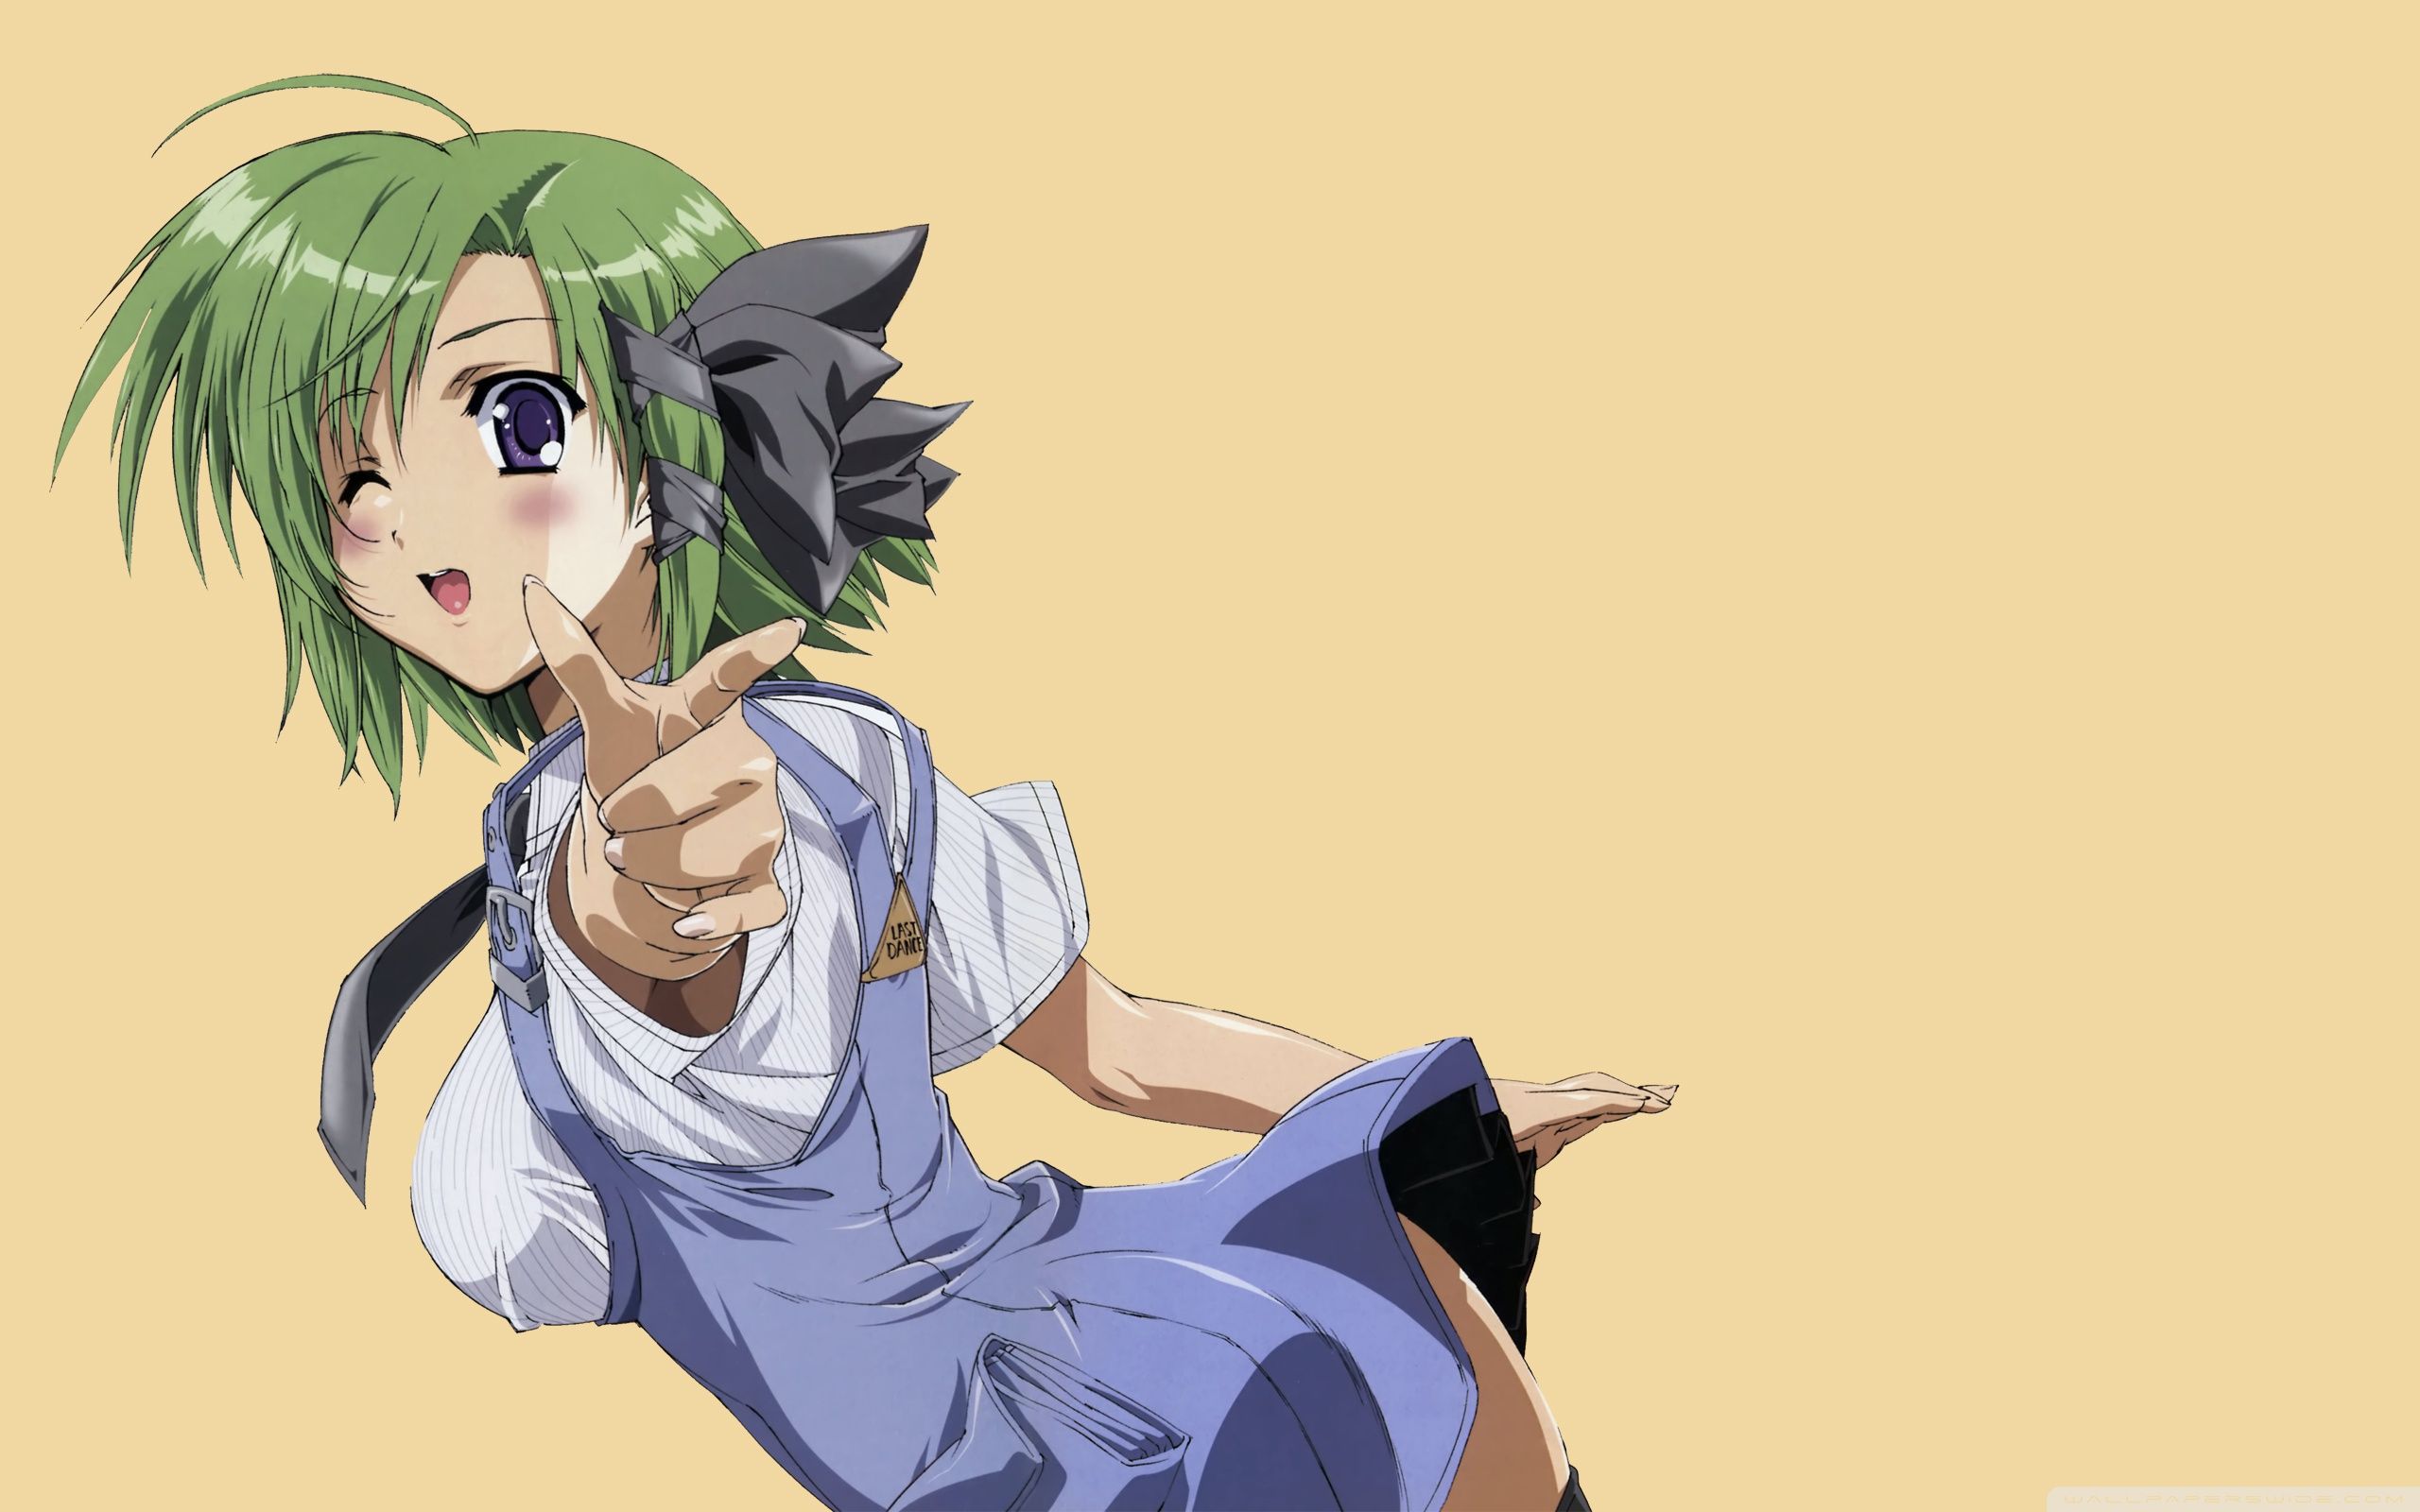 Anime Girl With Green Hair Ultra HD Desktop Background Wallpaper for 4K UHD TV, Tablet